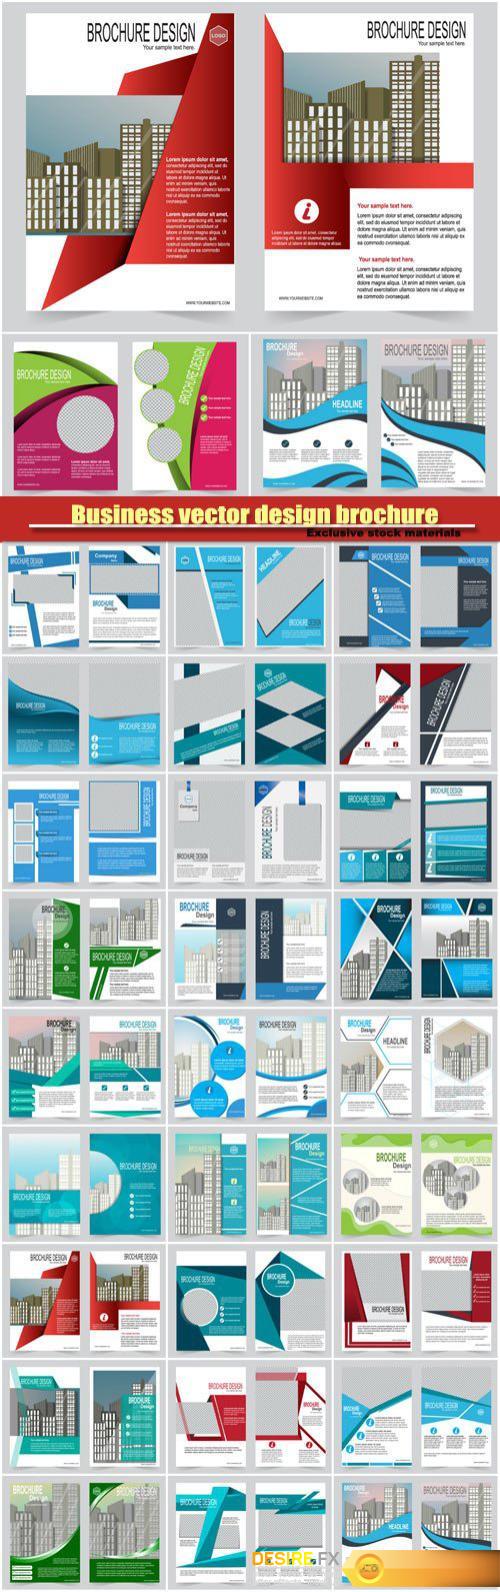 Business vector design brochure, flyer creative template